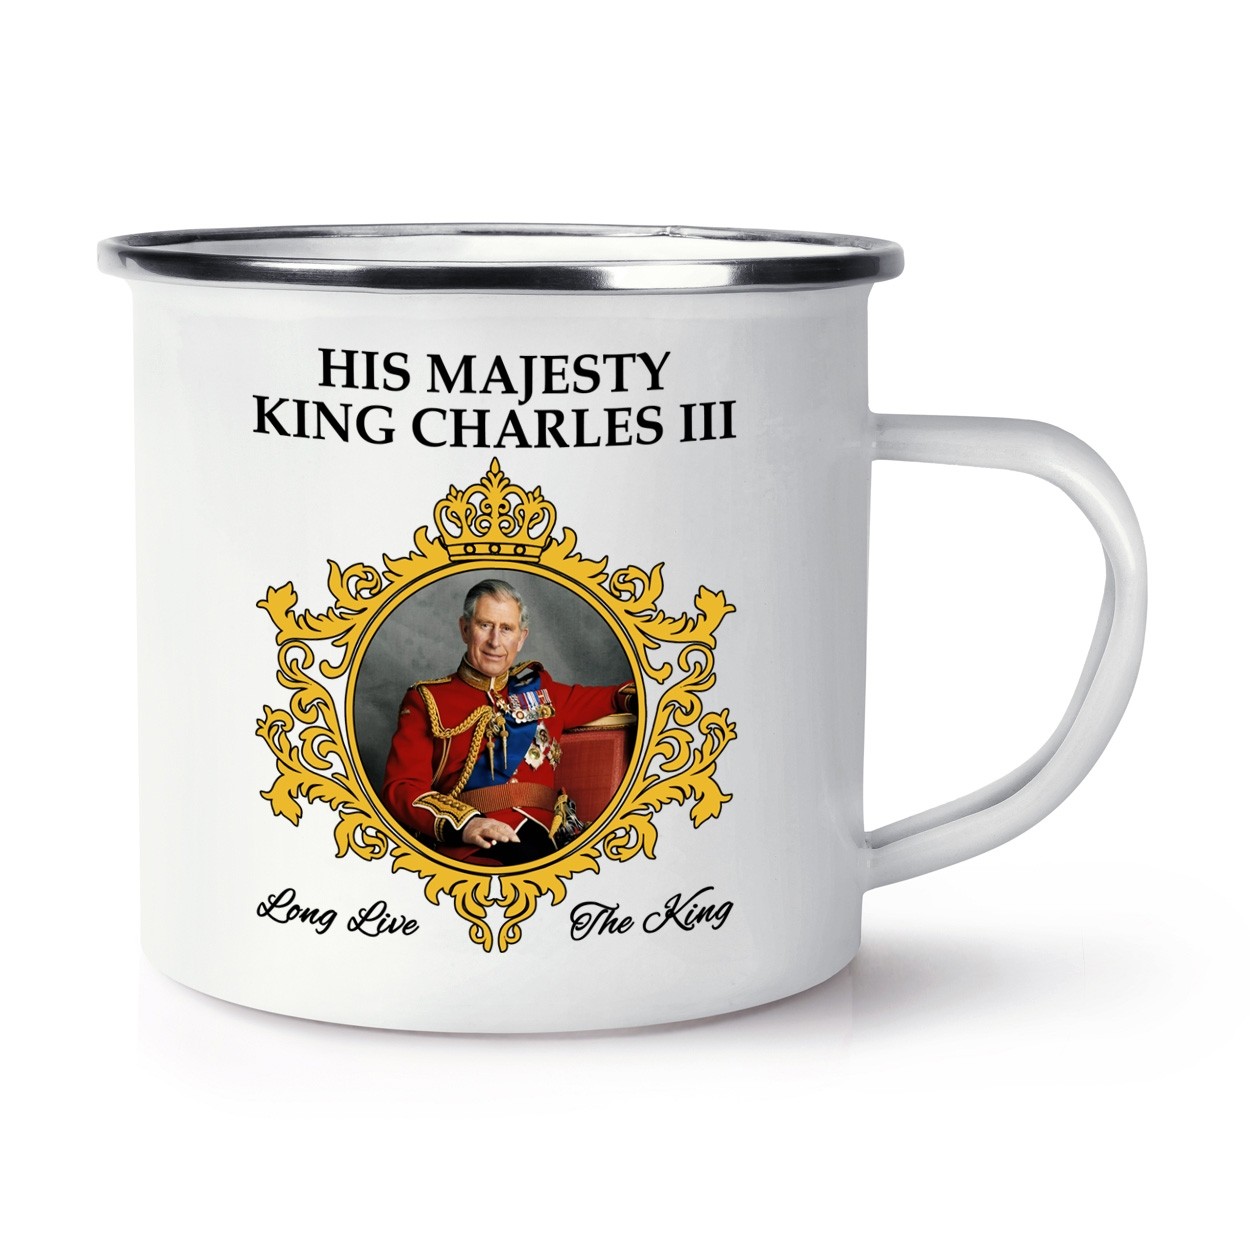 King Charles III 2022 Enamel Mug Cup Commemorative Gift His Majesty